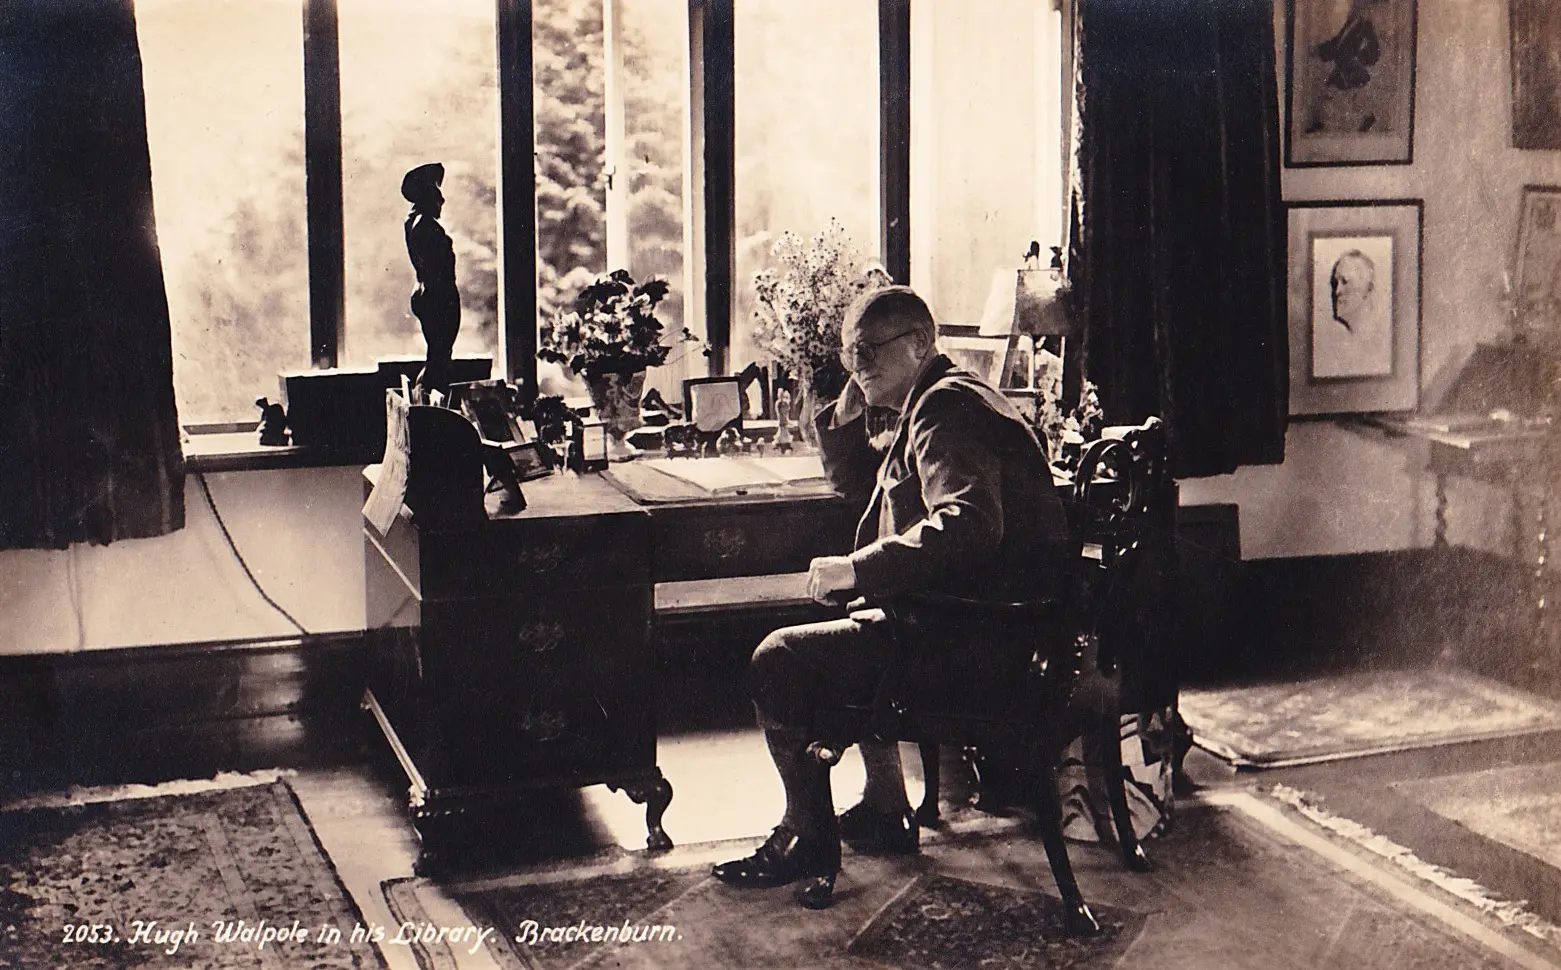 Hugh Walpole in his writing room at Brackenburn Lodge, Manesty Park, Cumbria